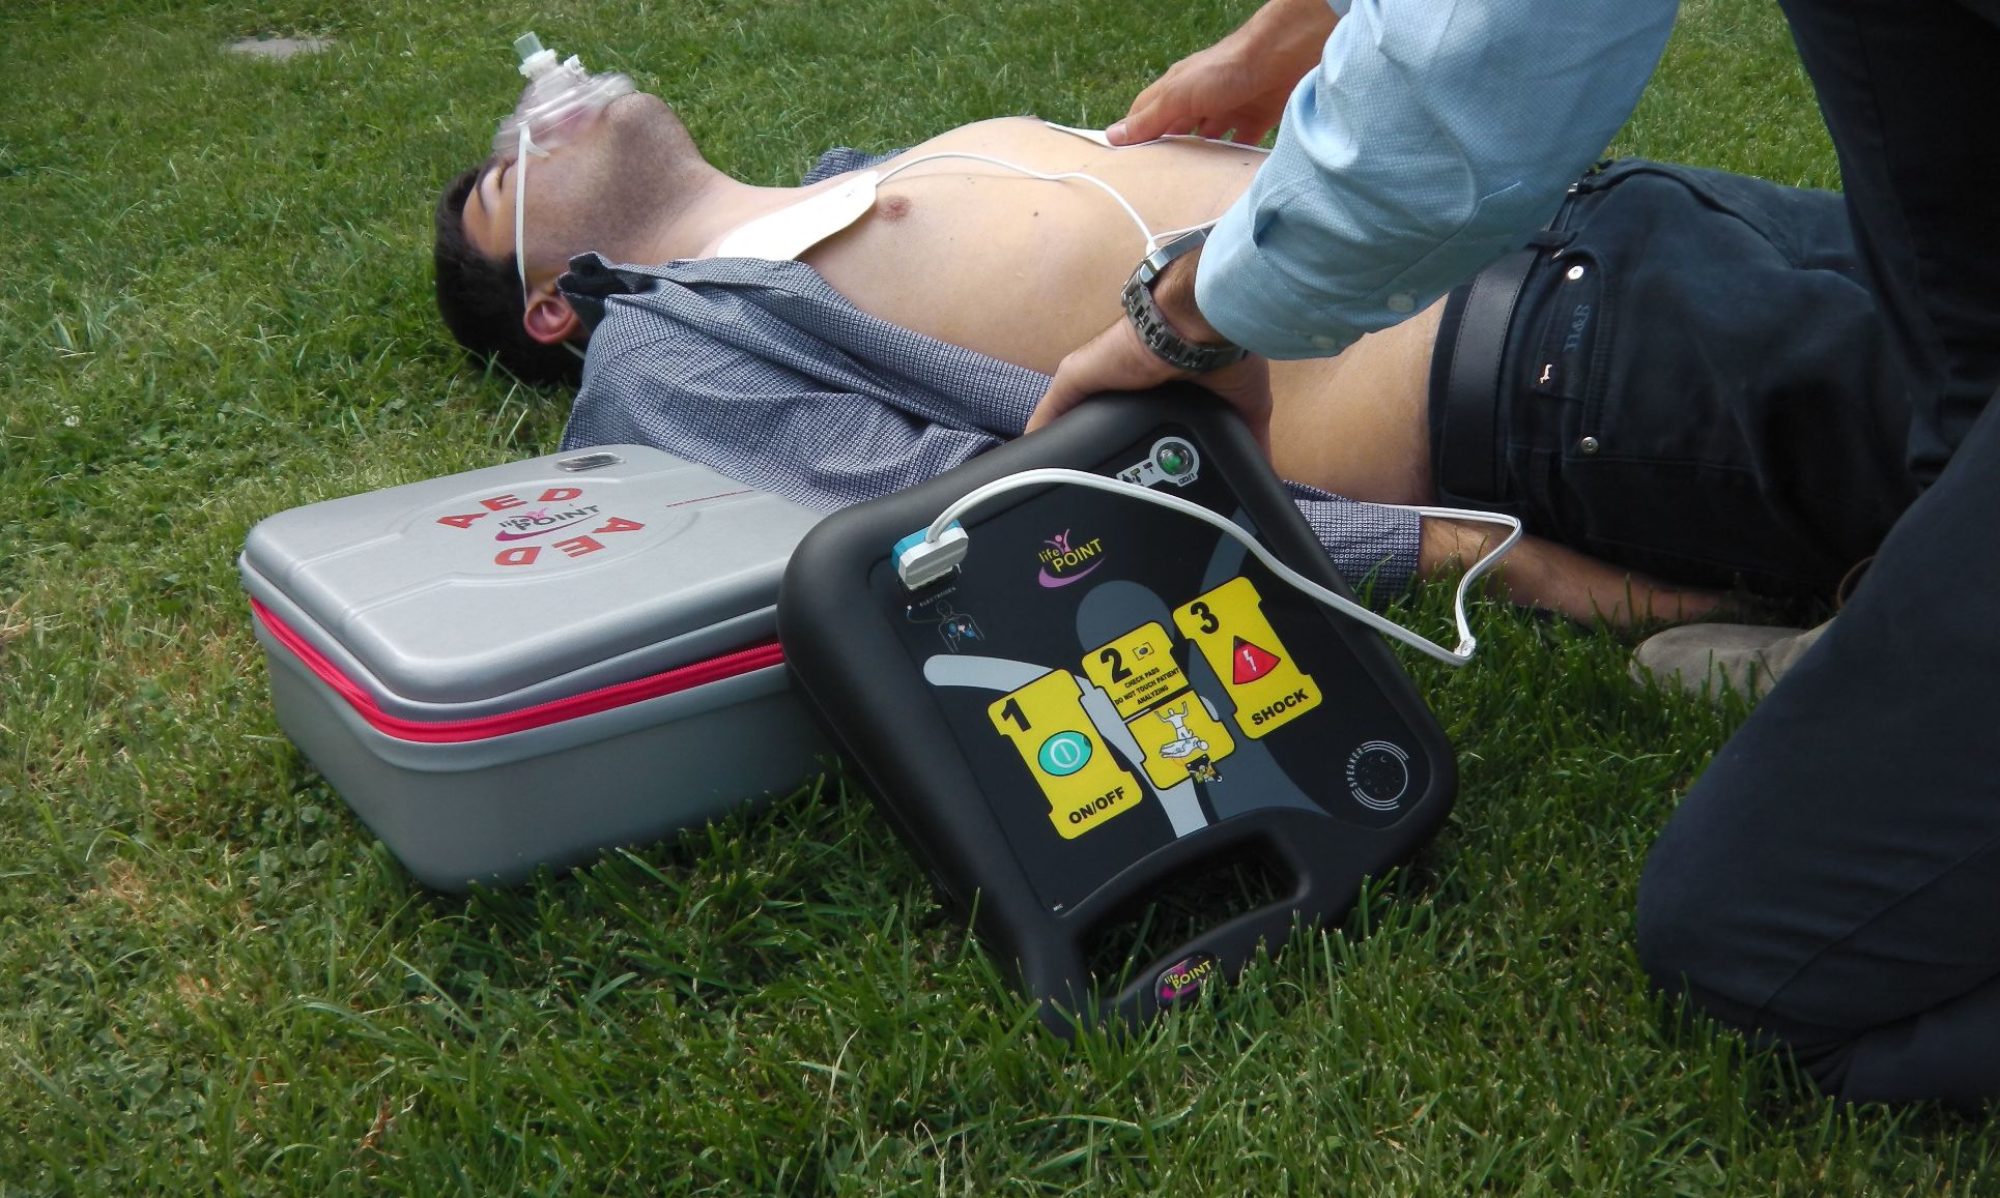 Importanta unui defibrilator in locuri publice si la serviciu